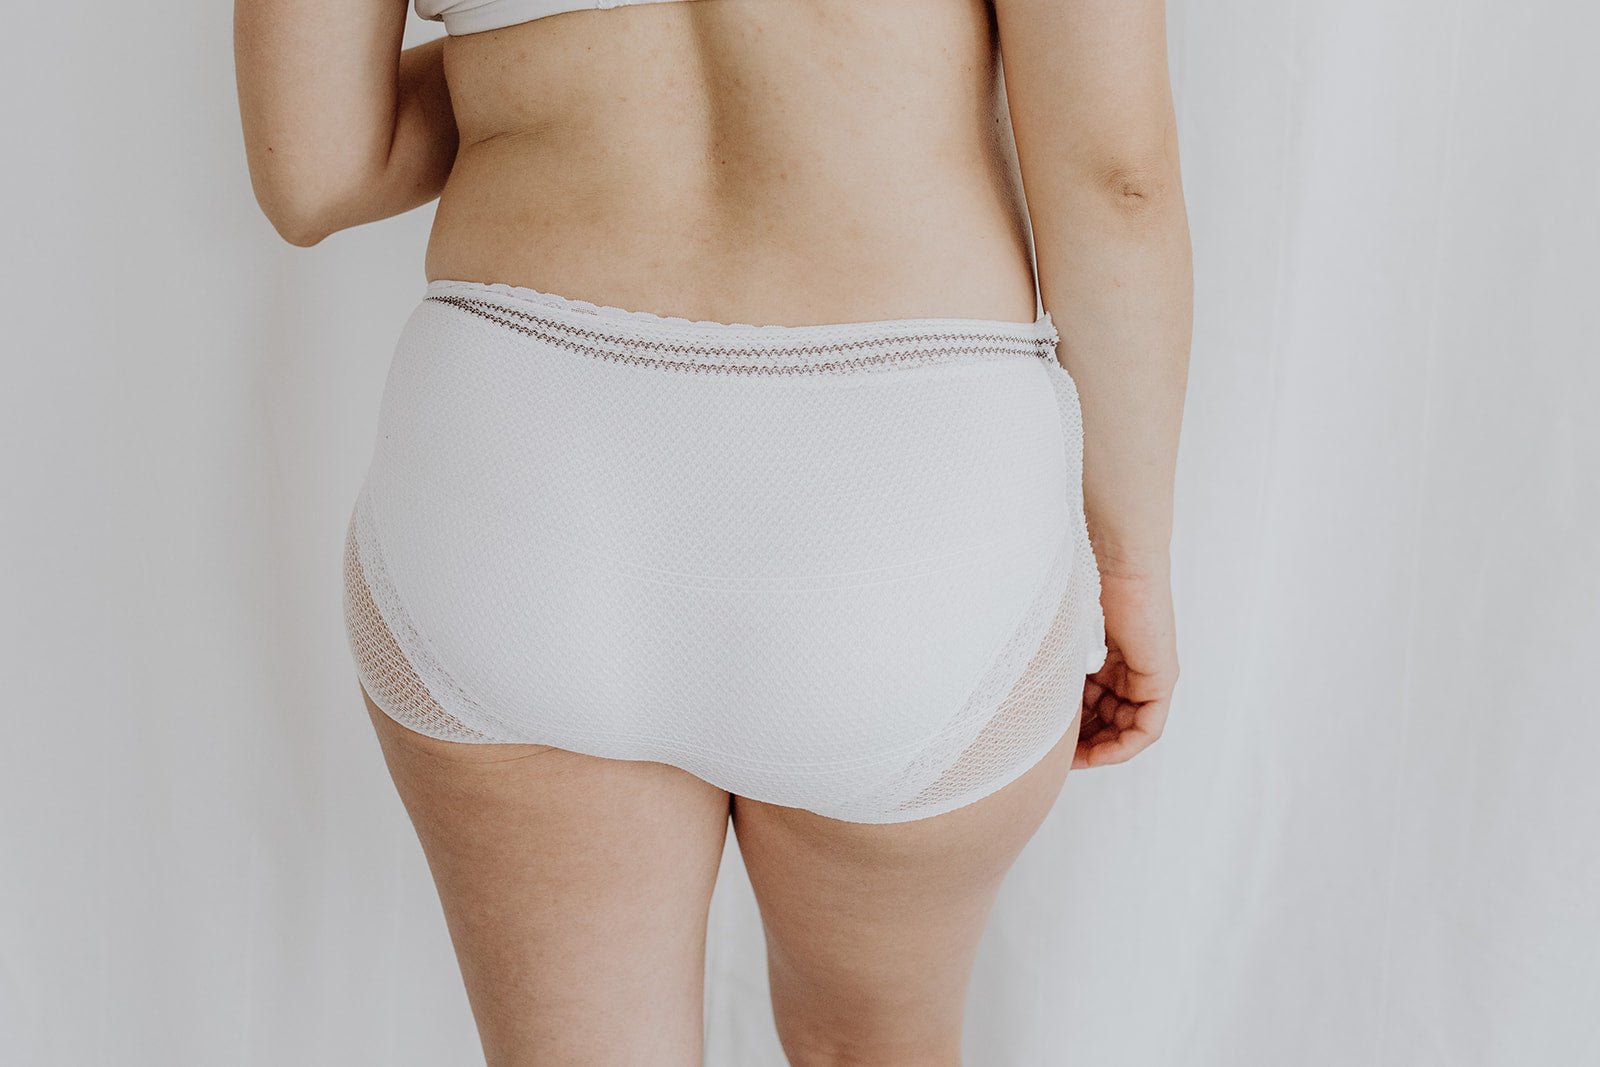 Postpartum Mesh Underwear Is Having A Moment